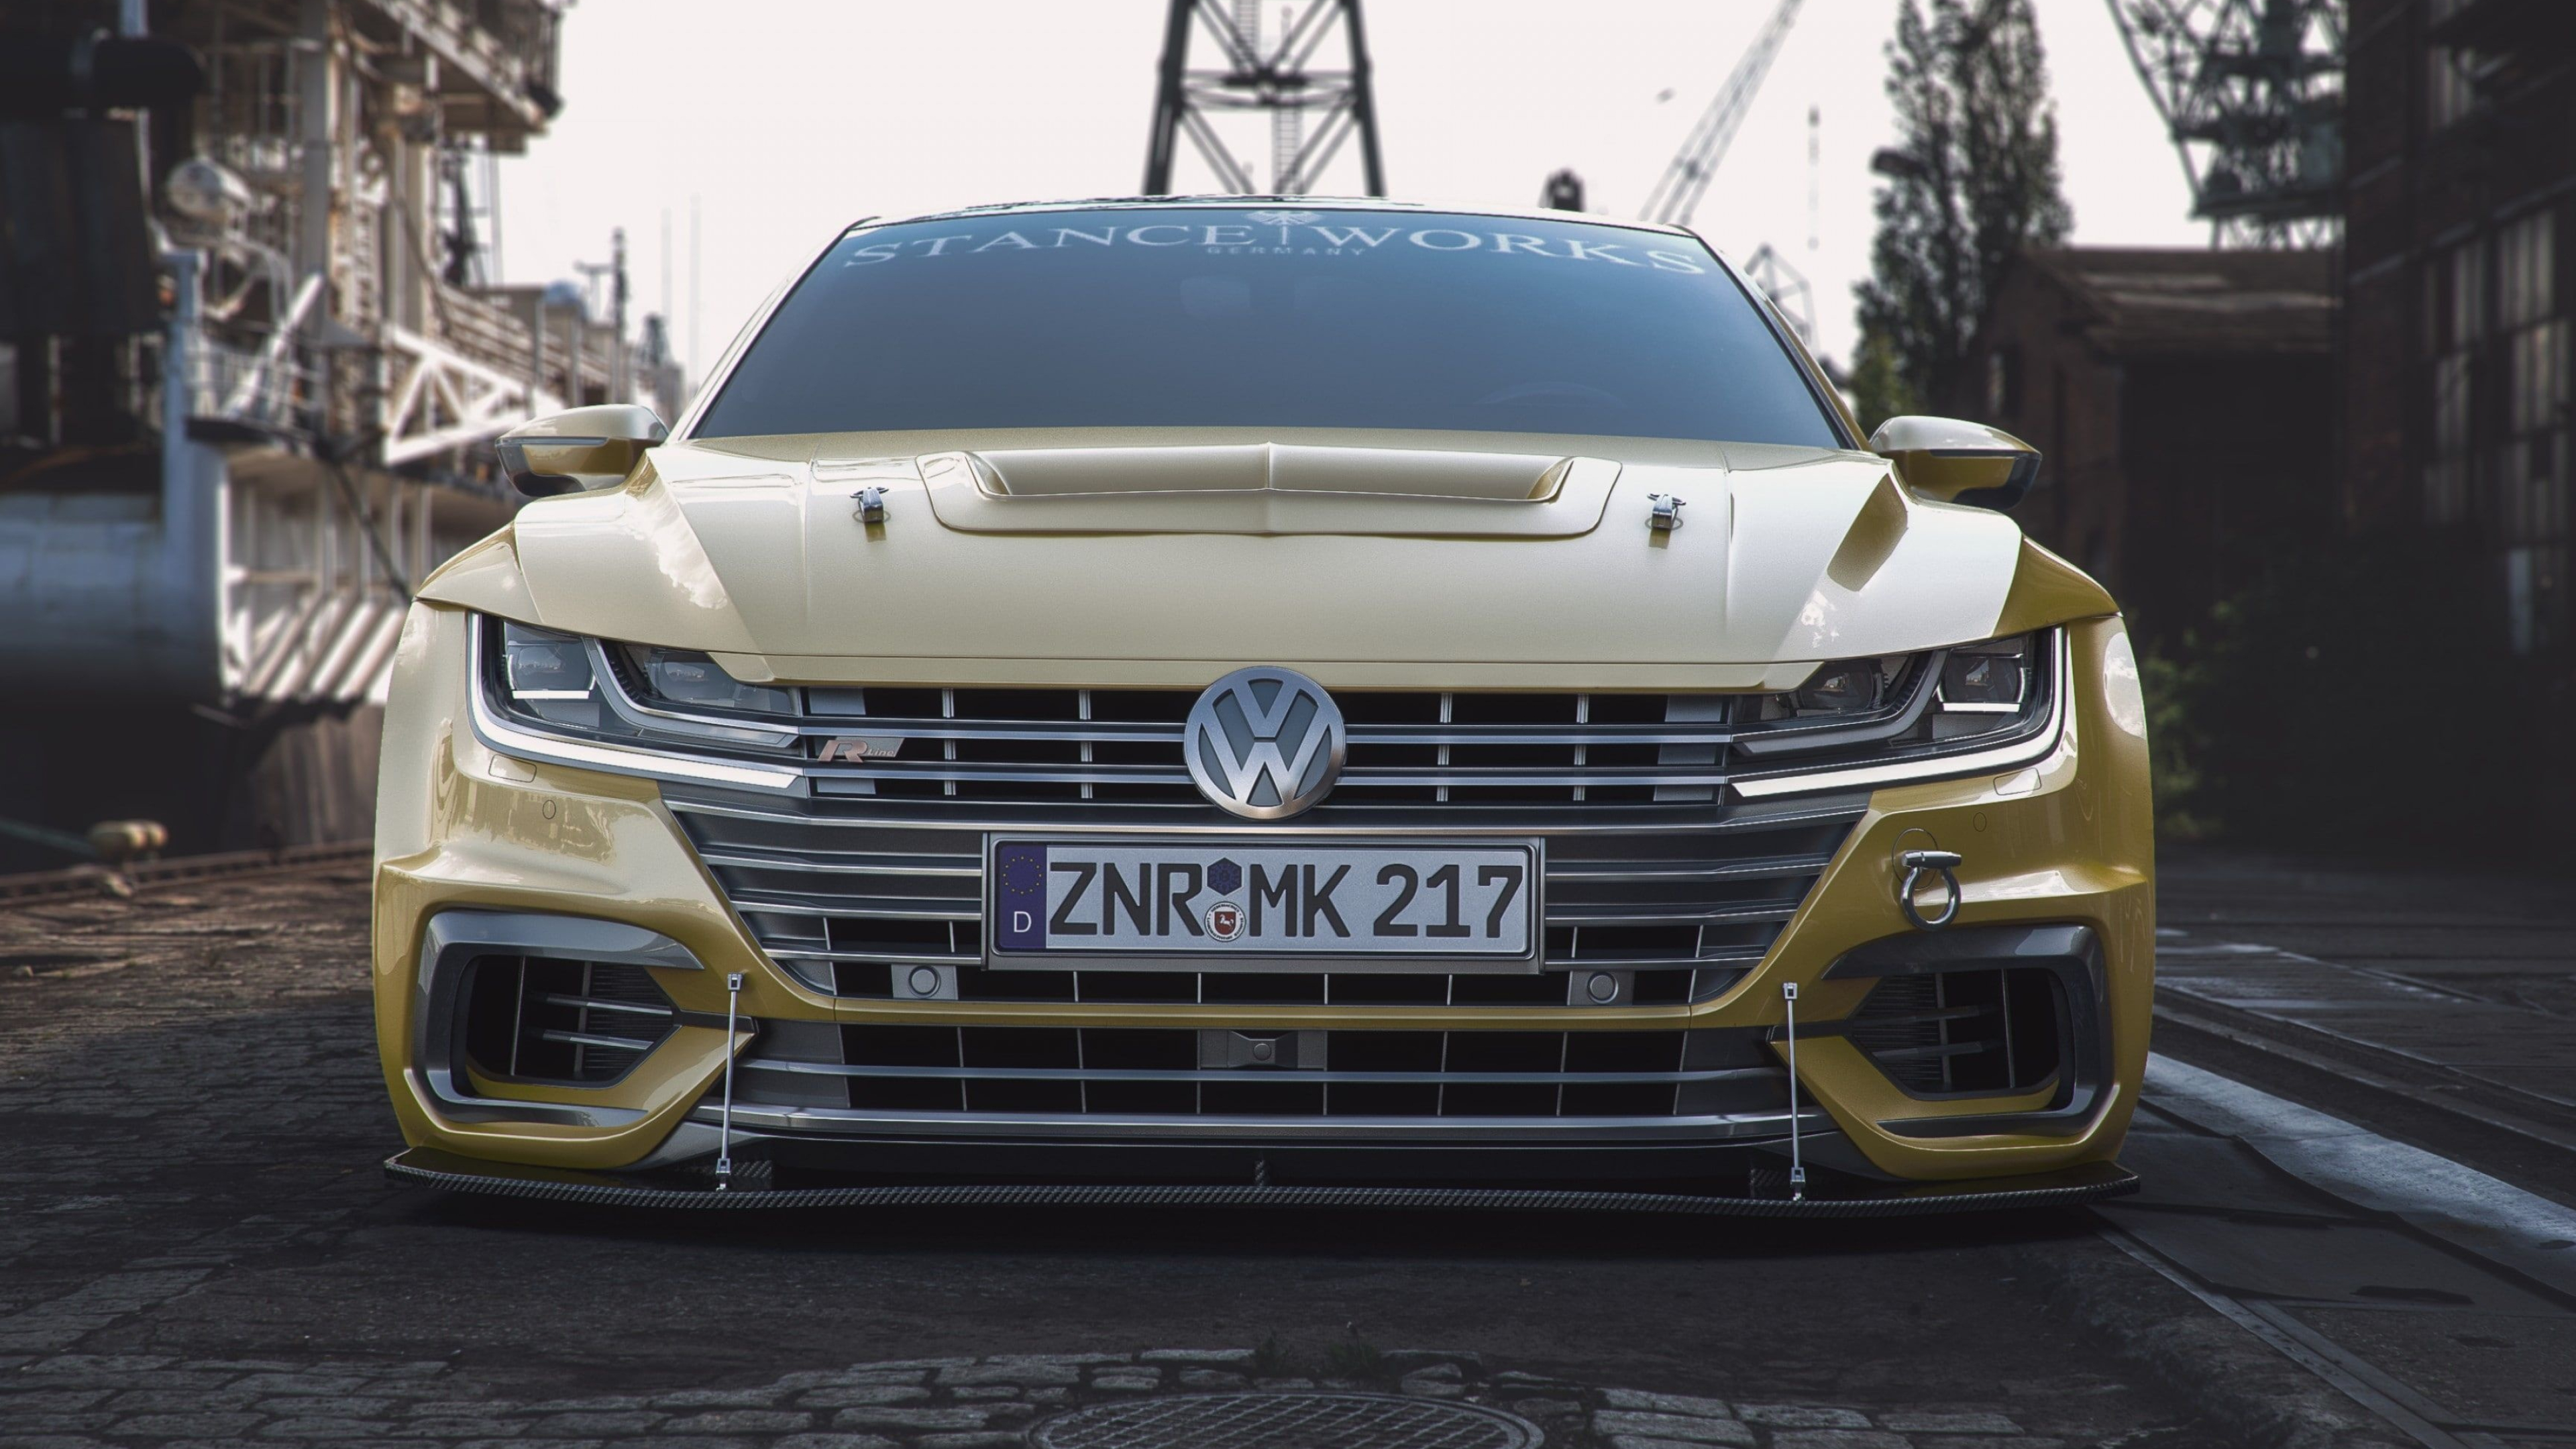 Volkswagen Arteon R-Line custom, 2018 car wallpaper, 4k resolution, Luxury car enthusiasts, 3840x2160 4K Desktop